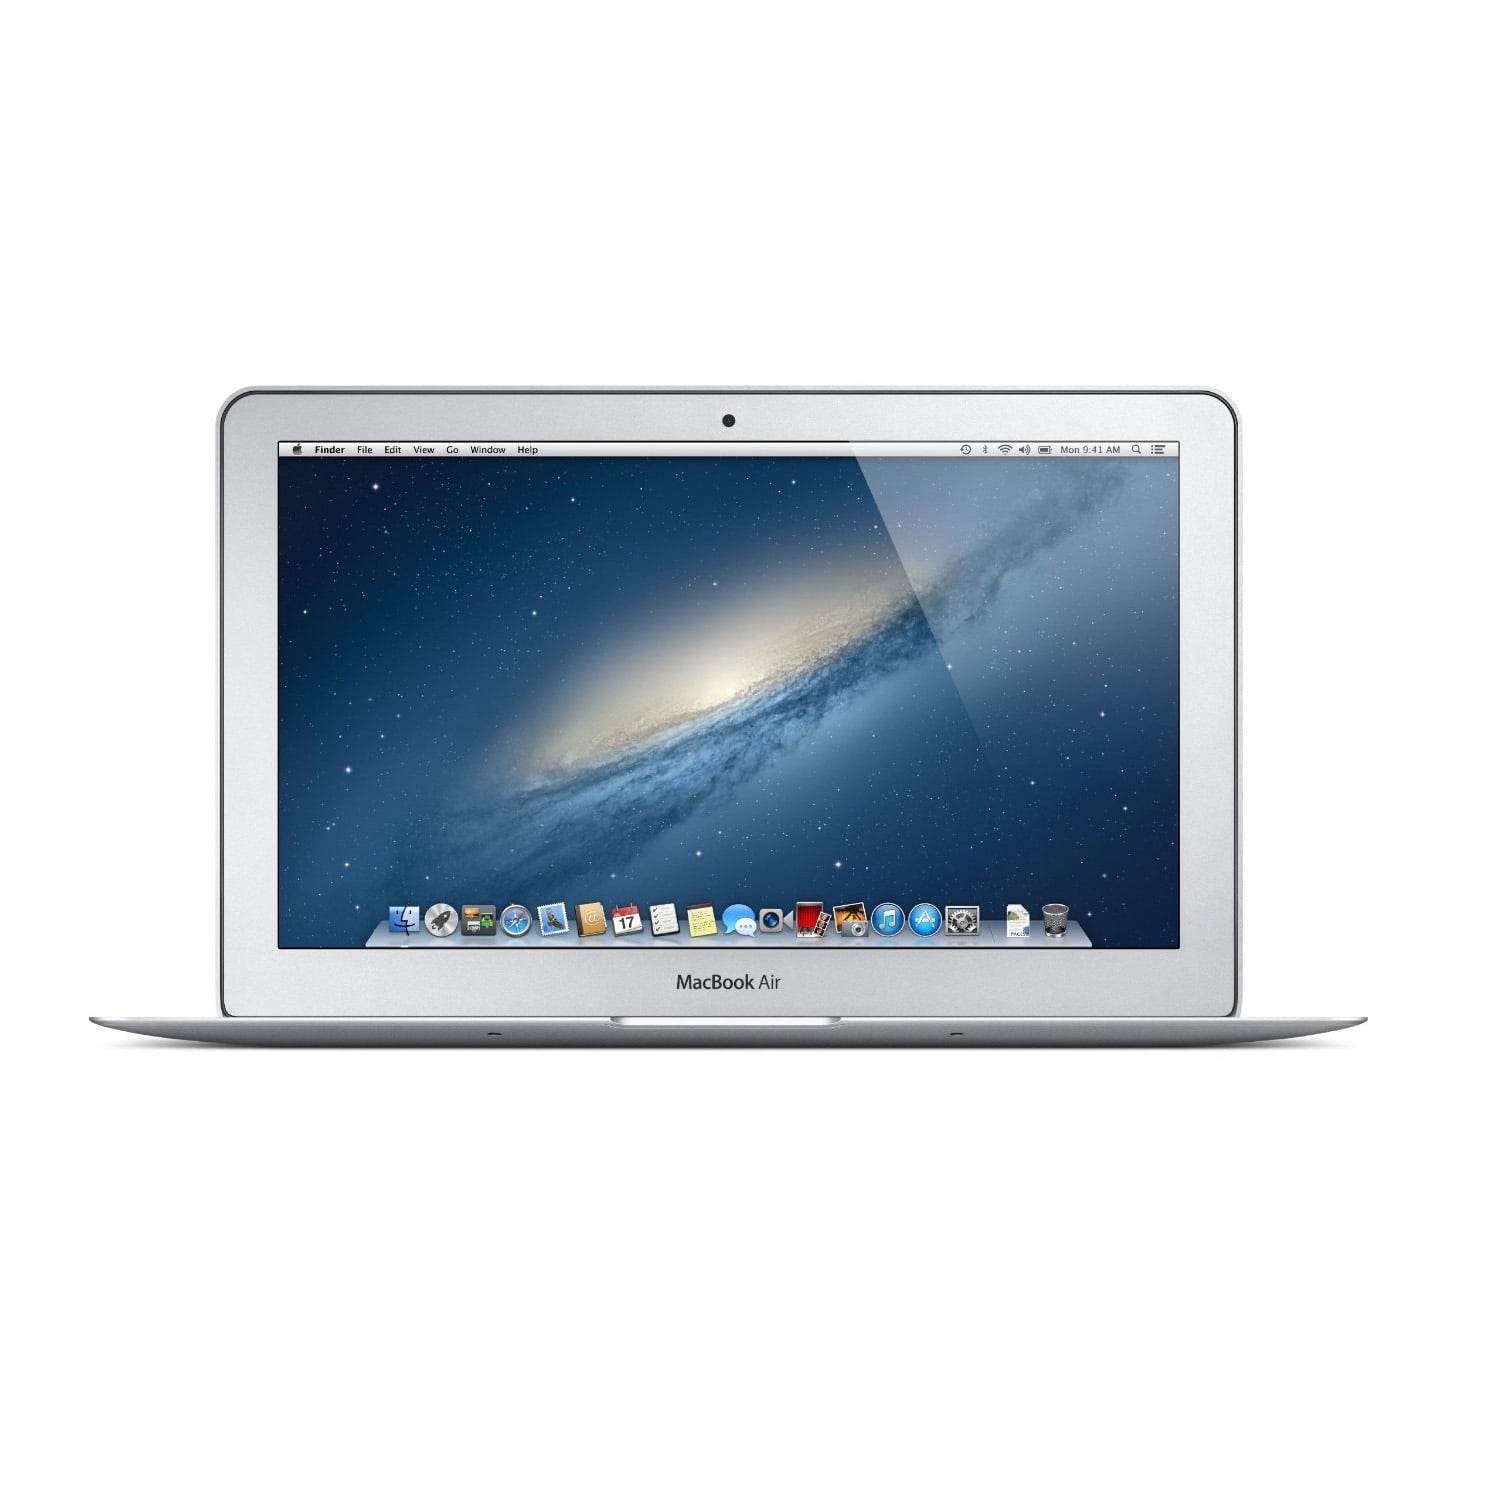 Apple MacBook Air 11.6in MD711LL/A Mid 2013 - Intel Core i5-4250U